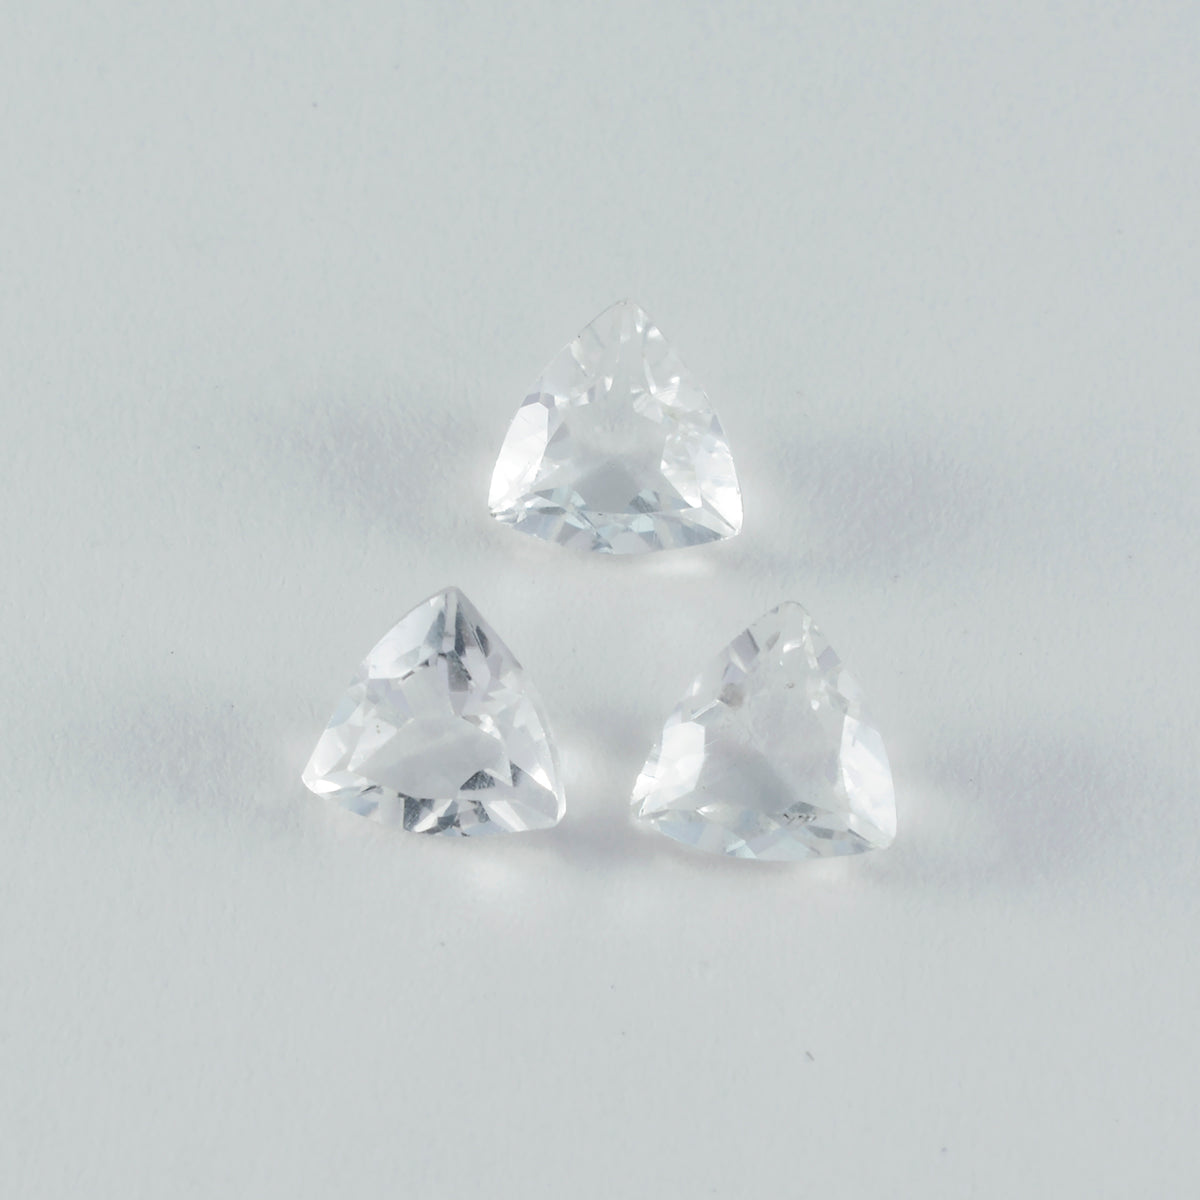 Riyogems 1PC White Crystal Quartz Faceted 12x12 mm Trillion Shape A Quality Gem